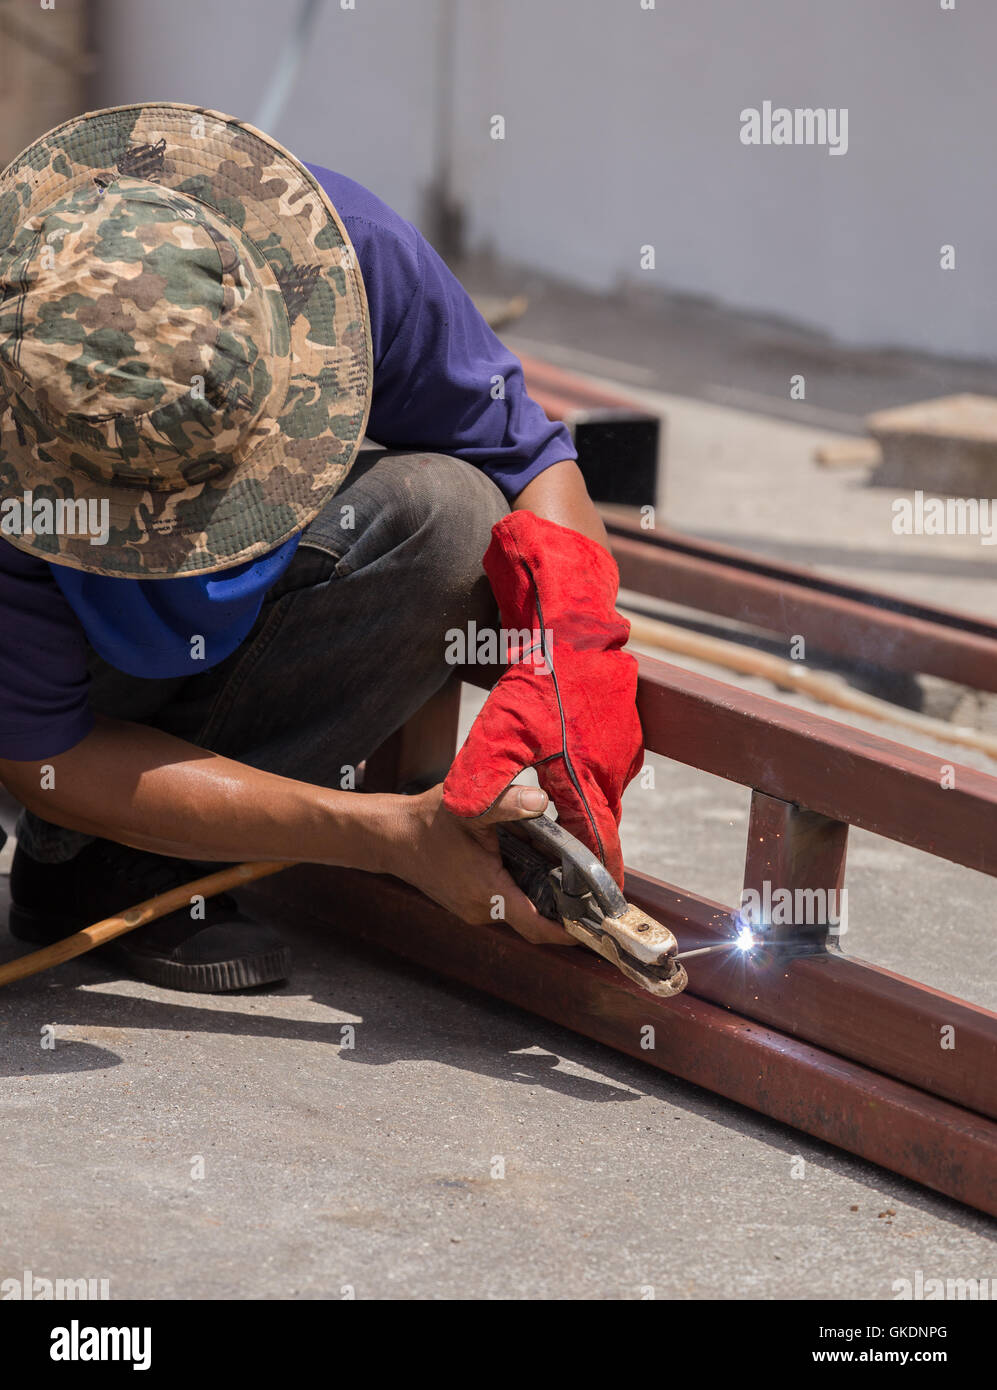 Welder working a welding metal. Not wearing glove Stock Photo